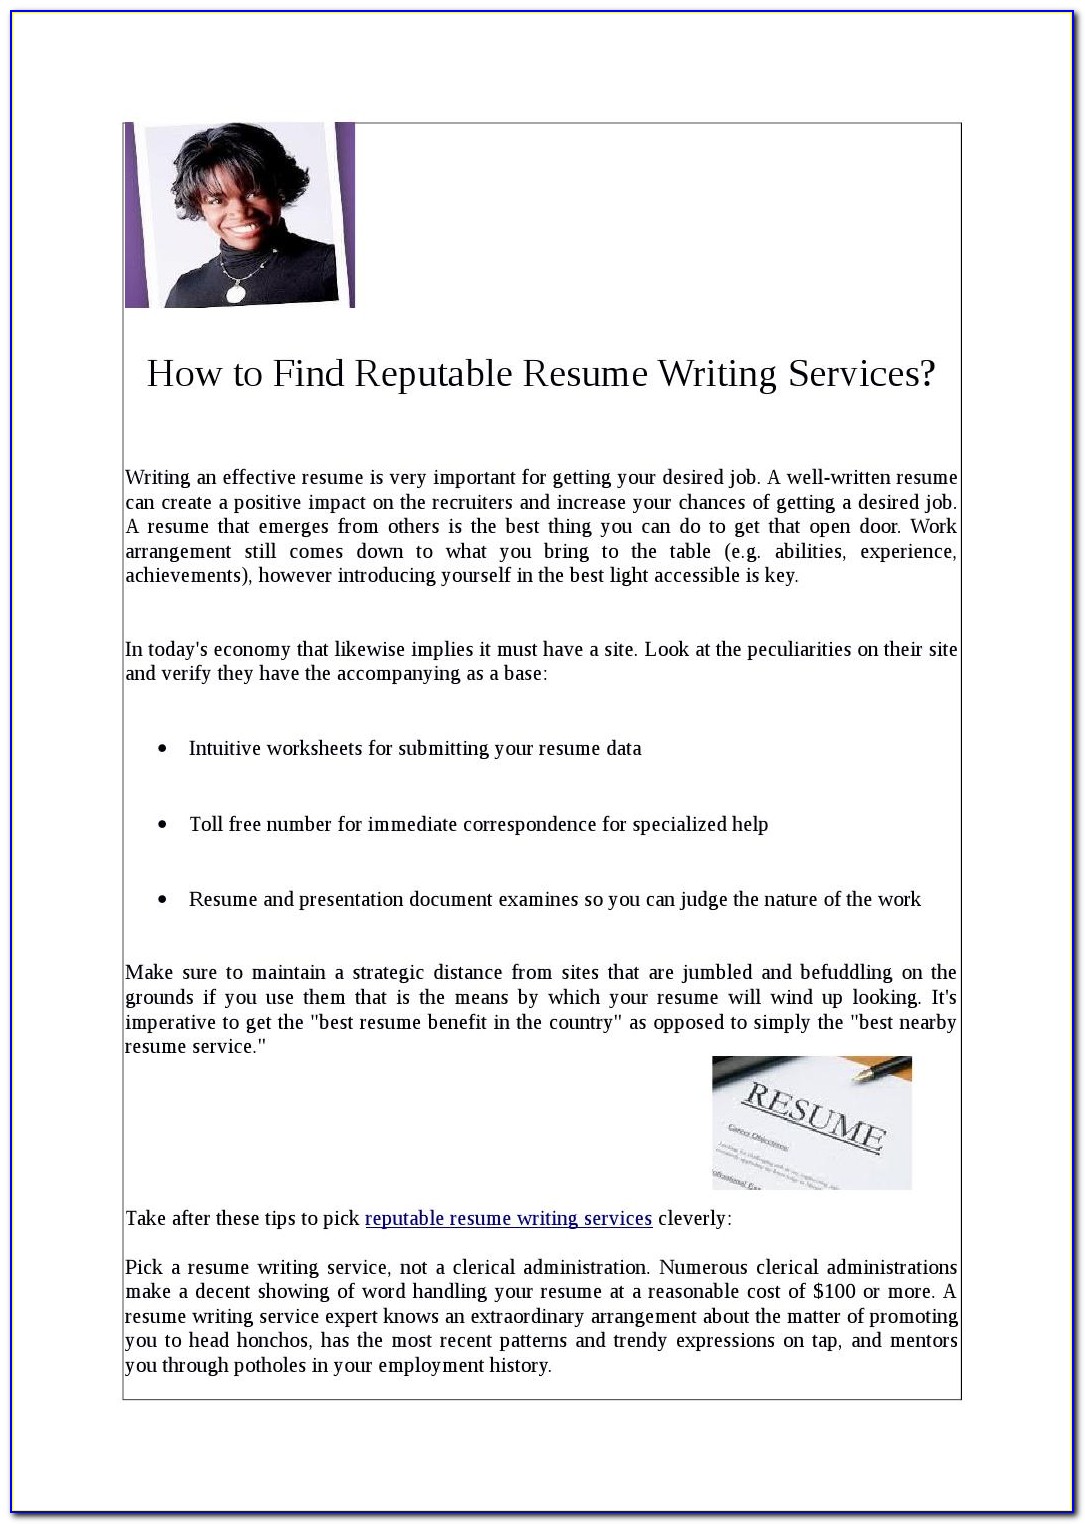 Reputable Resume Writing Companies